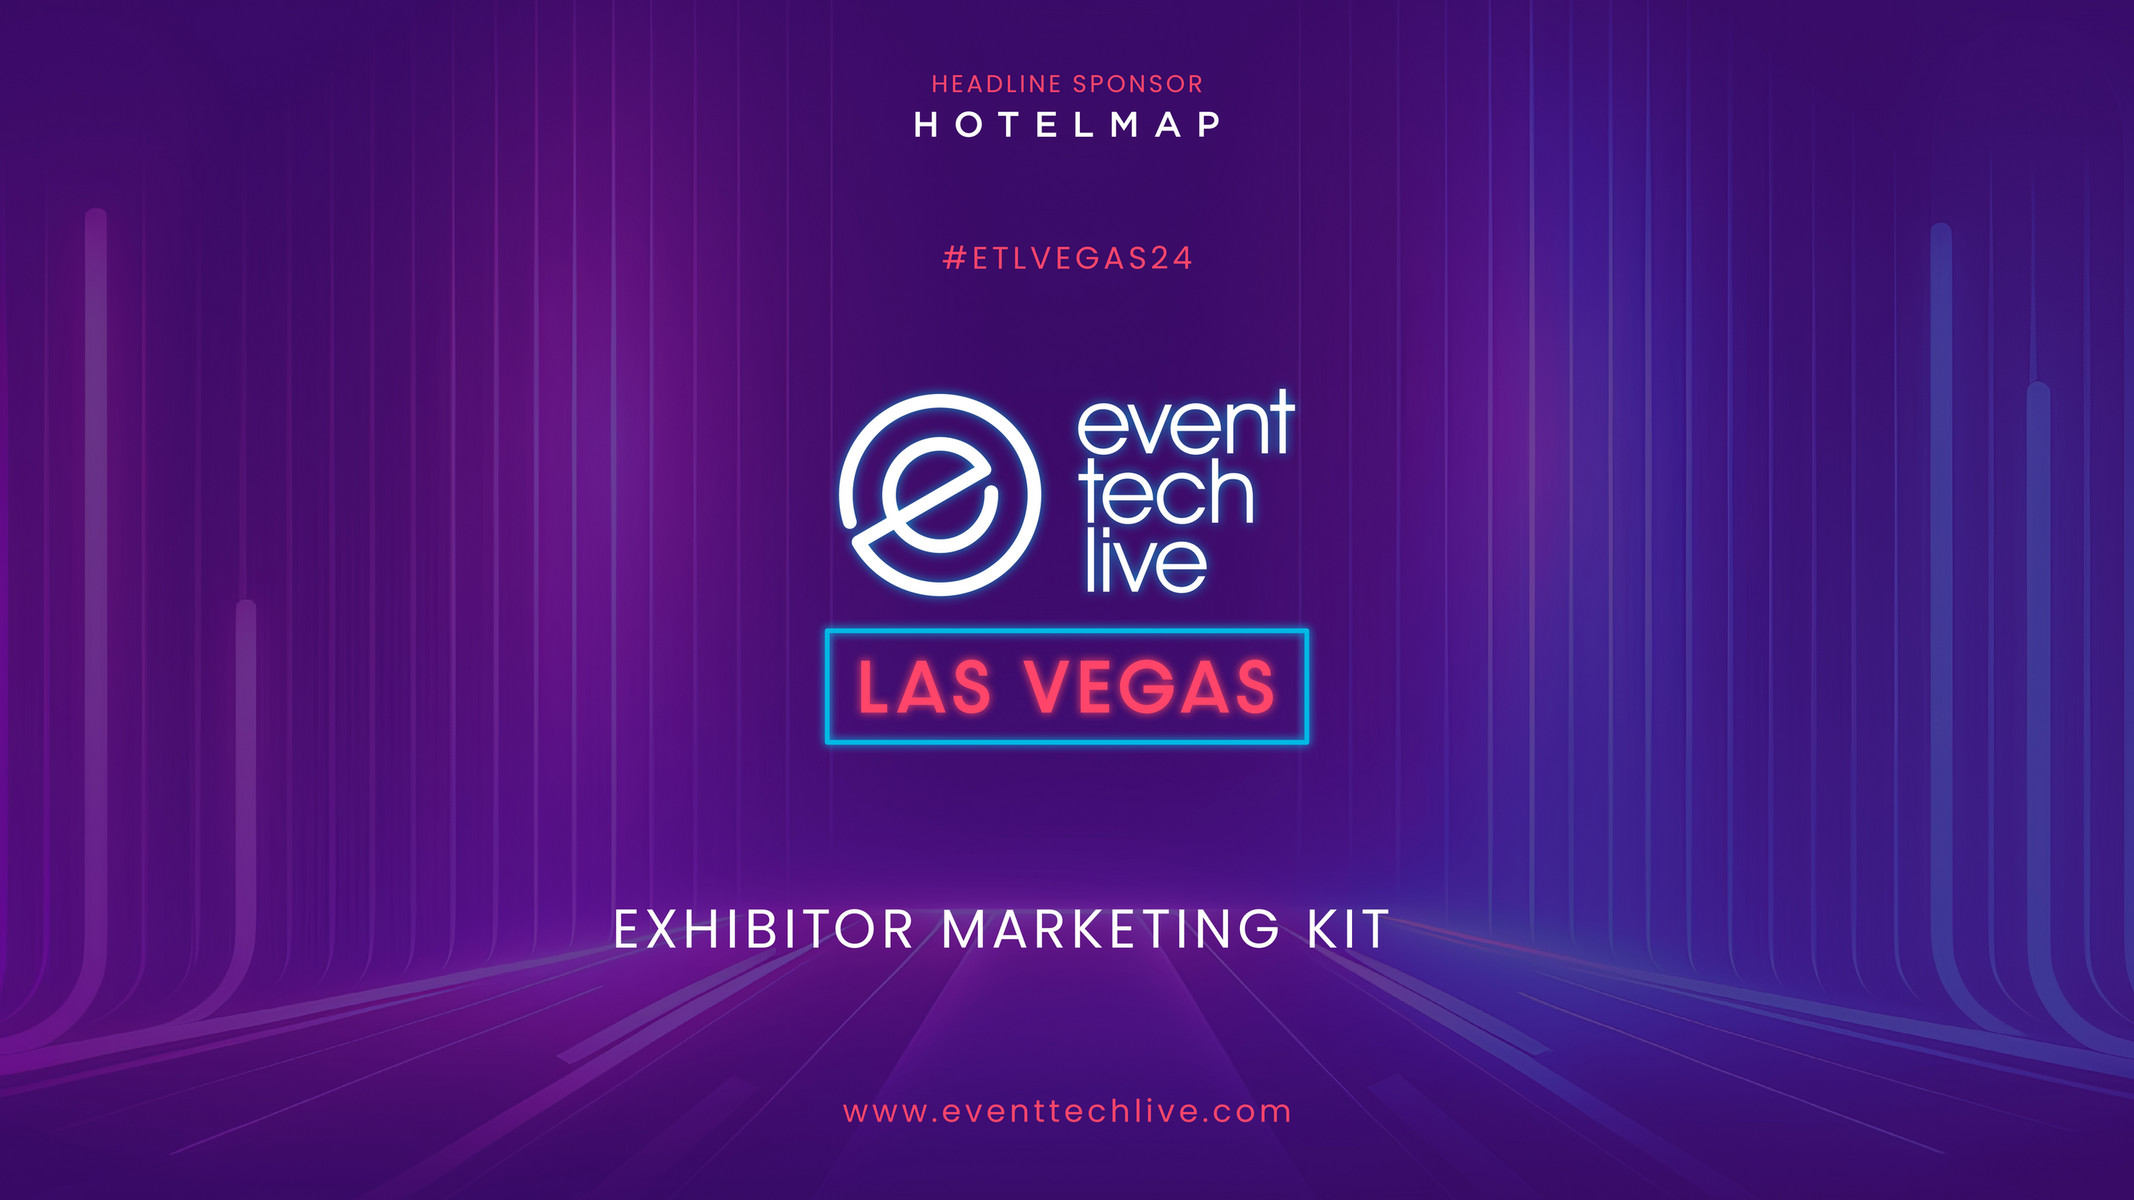 Event Industry News Event Tech Live Las Vegas Exhibitor Kit